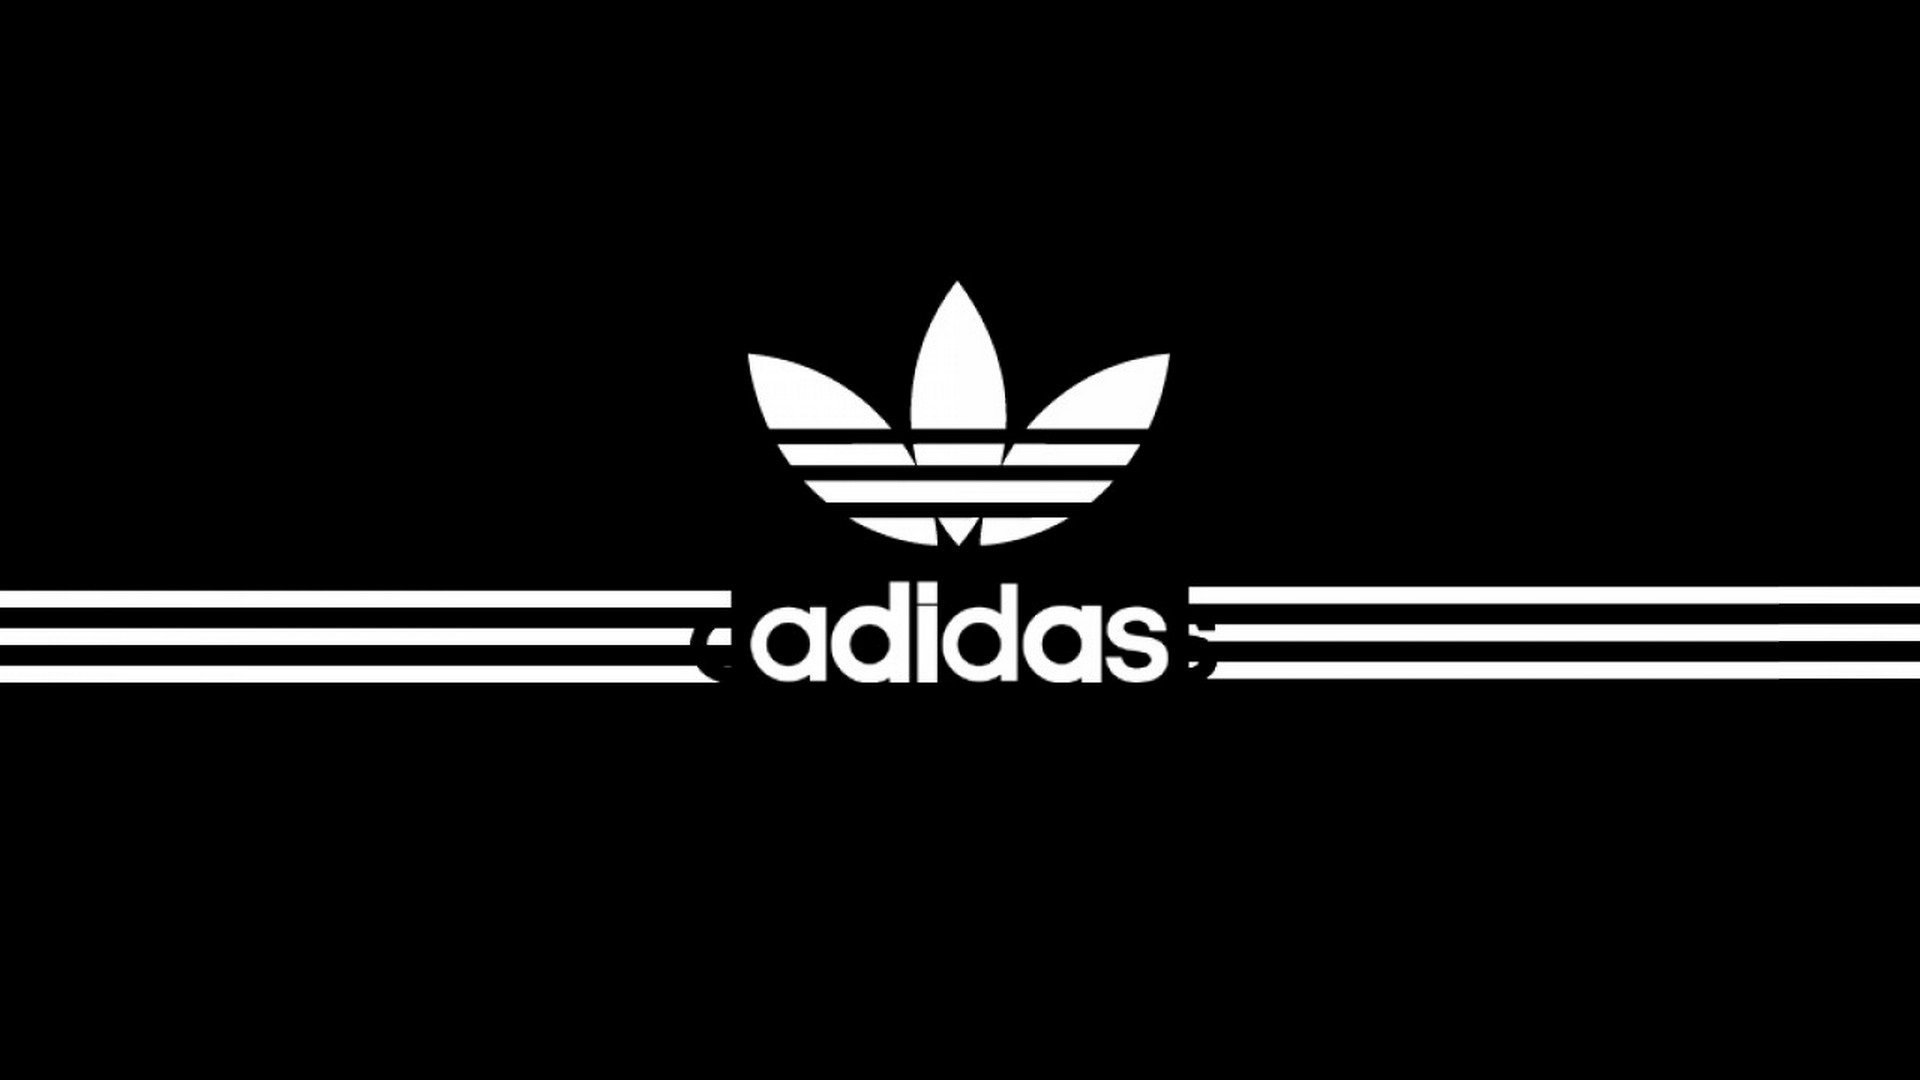 Суворов адидас. Адидас логотип 2021. Обои адидас. Адидас рисунок. Adidas на черном фоне.